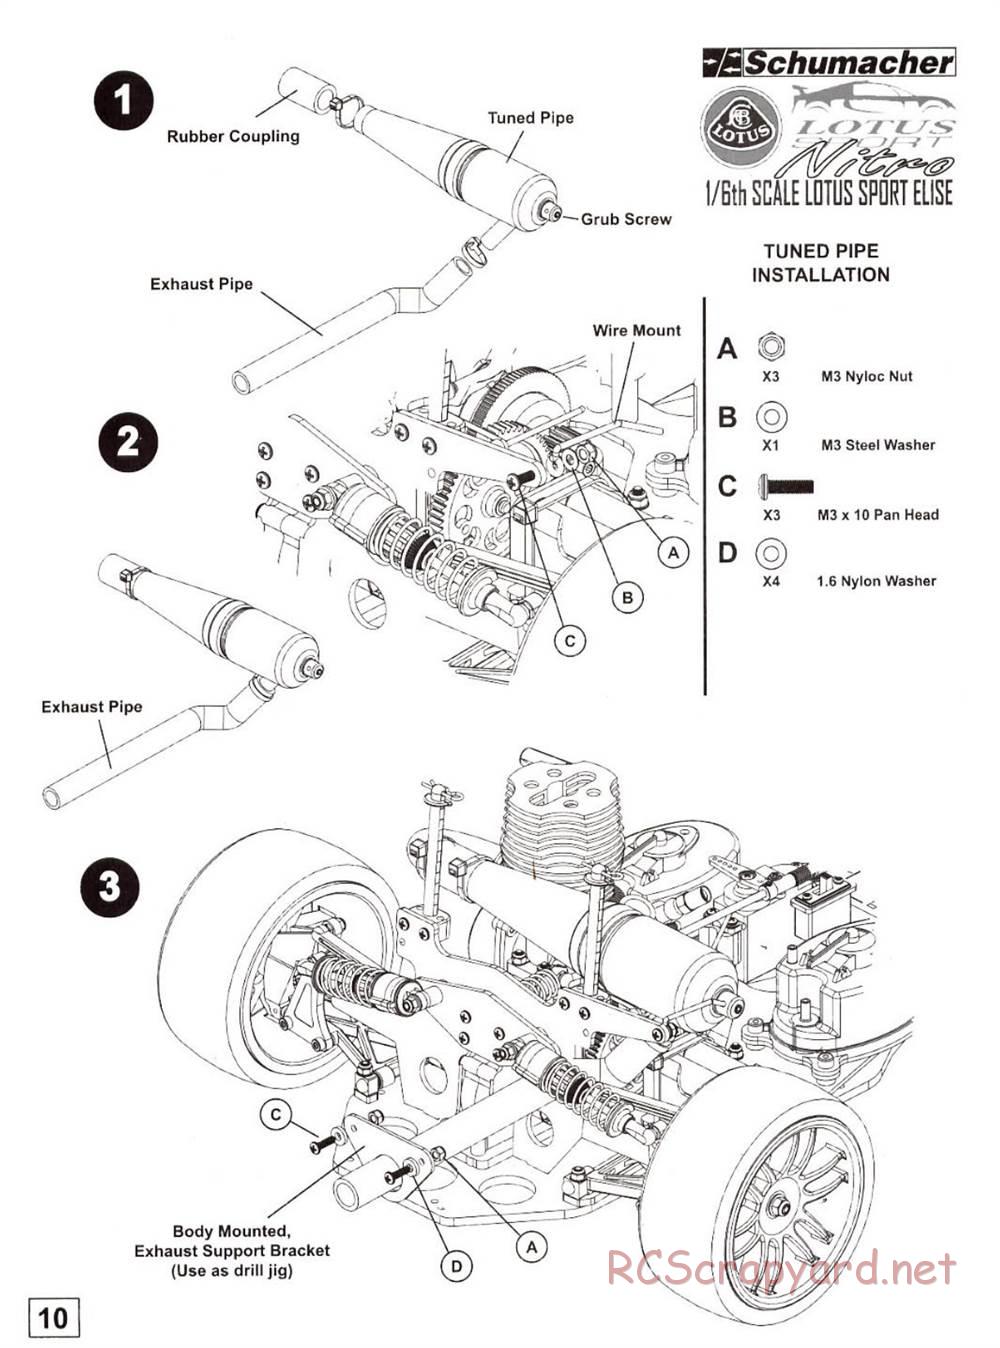 Schumacher - Big 6 Lotus Nitro - Manual - Page 4